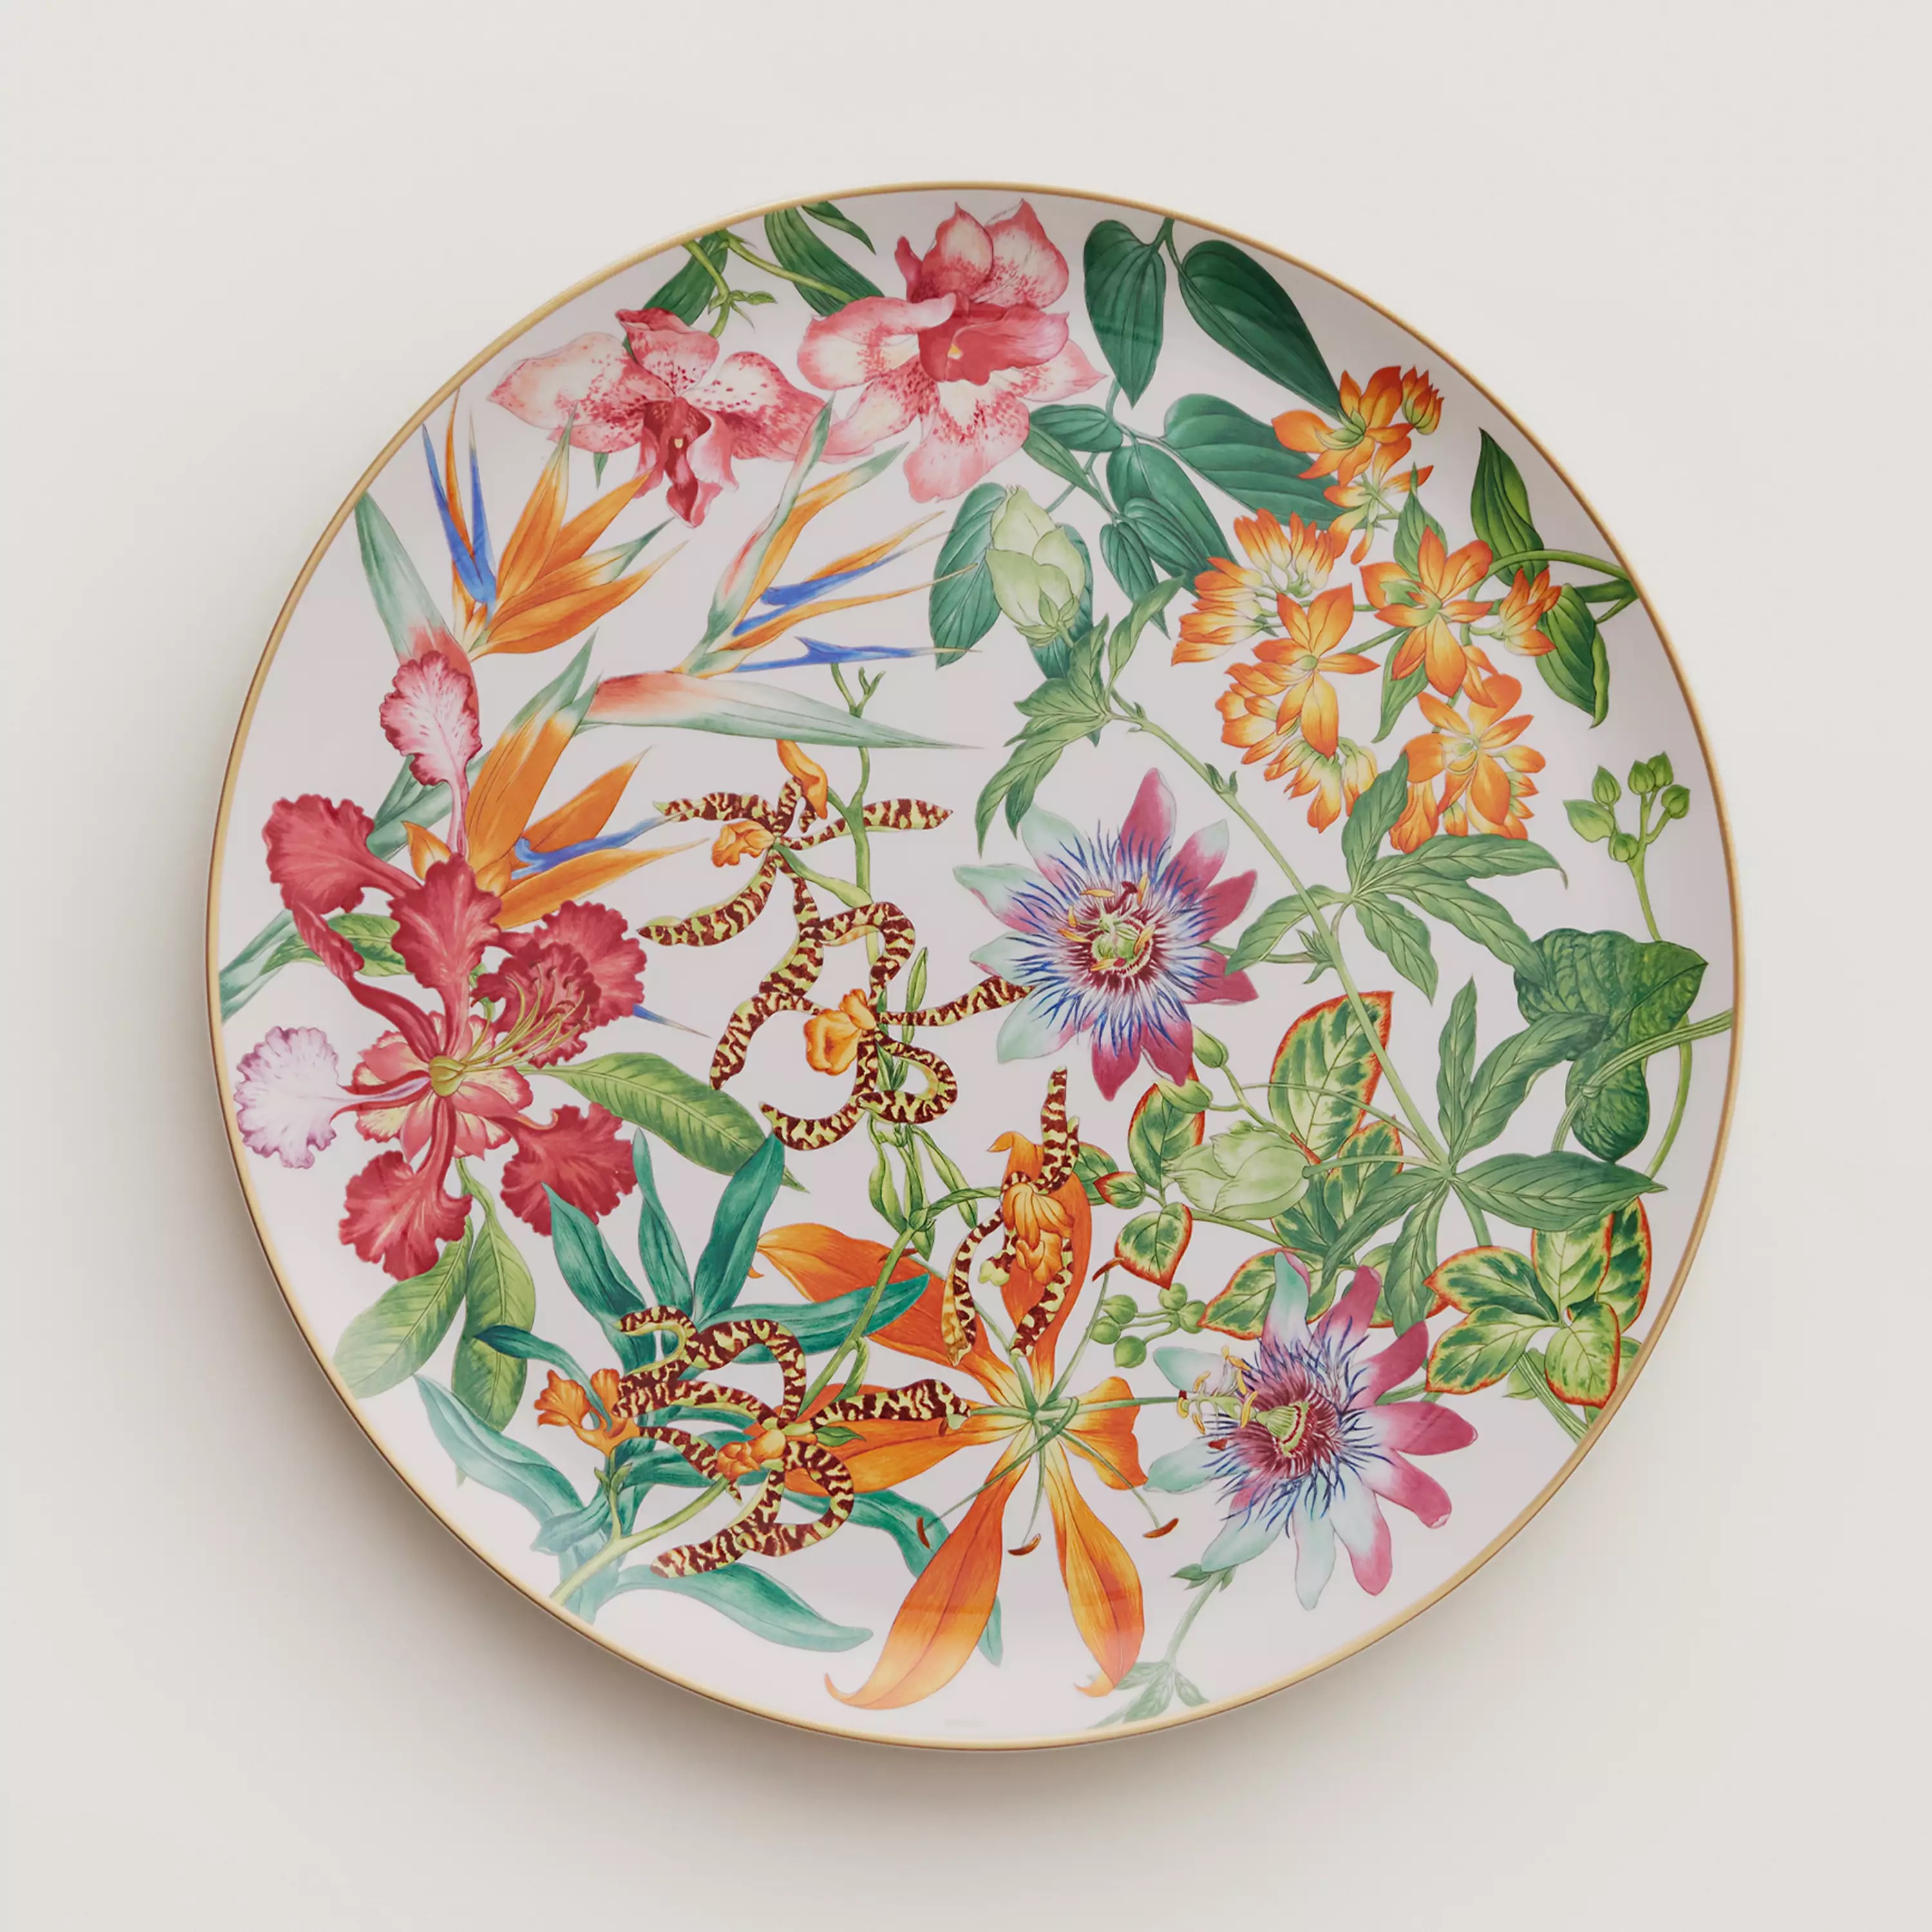 Passifolia Tart Platter in porcelain Decorated using chromolithography Measures 12.6" diameter, $570. Photo via Hermès.com.